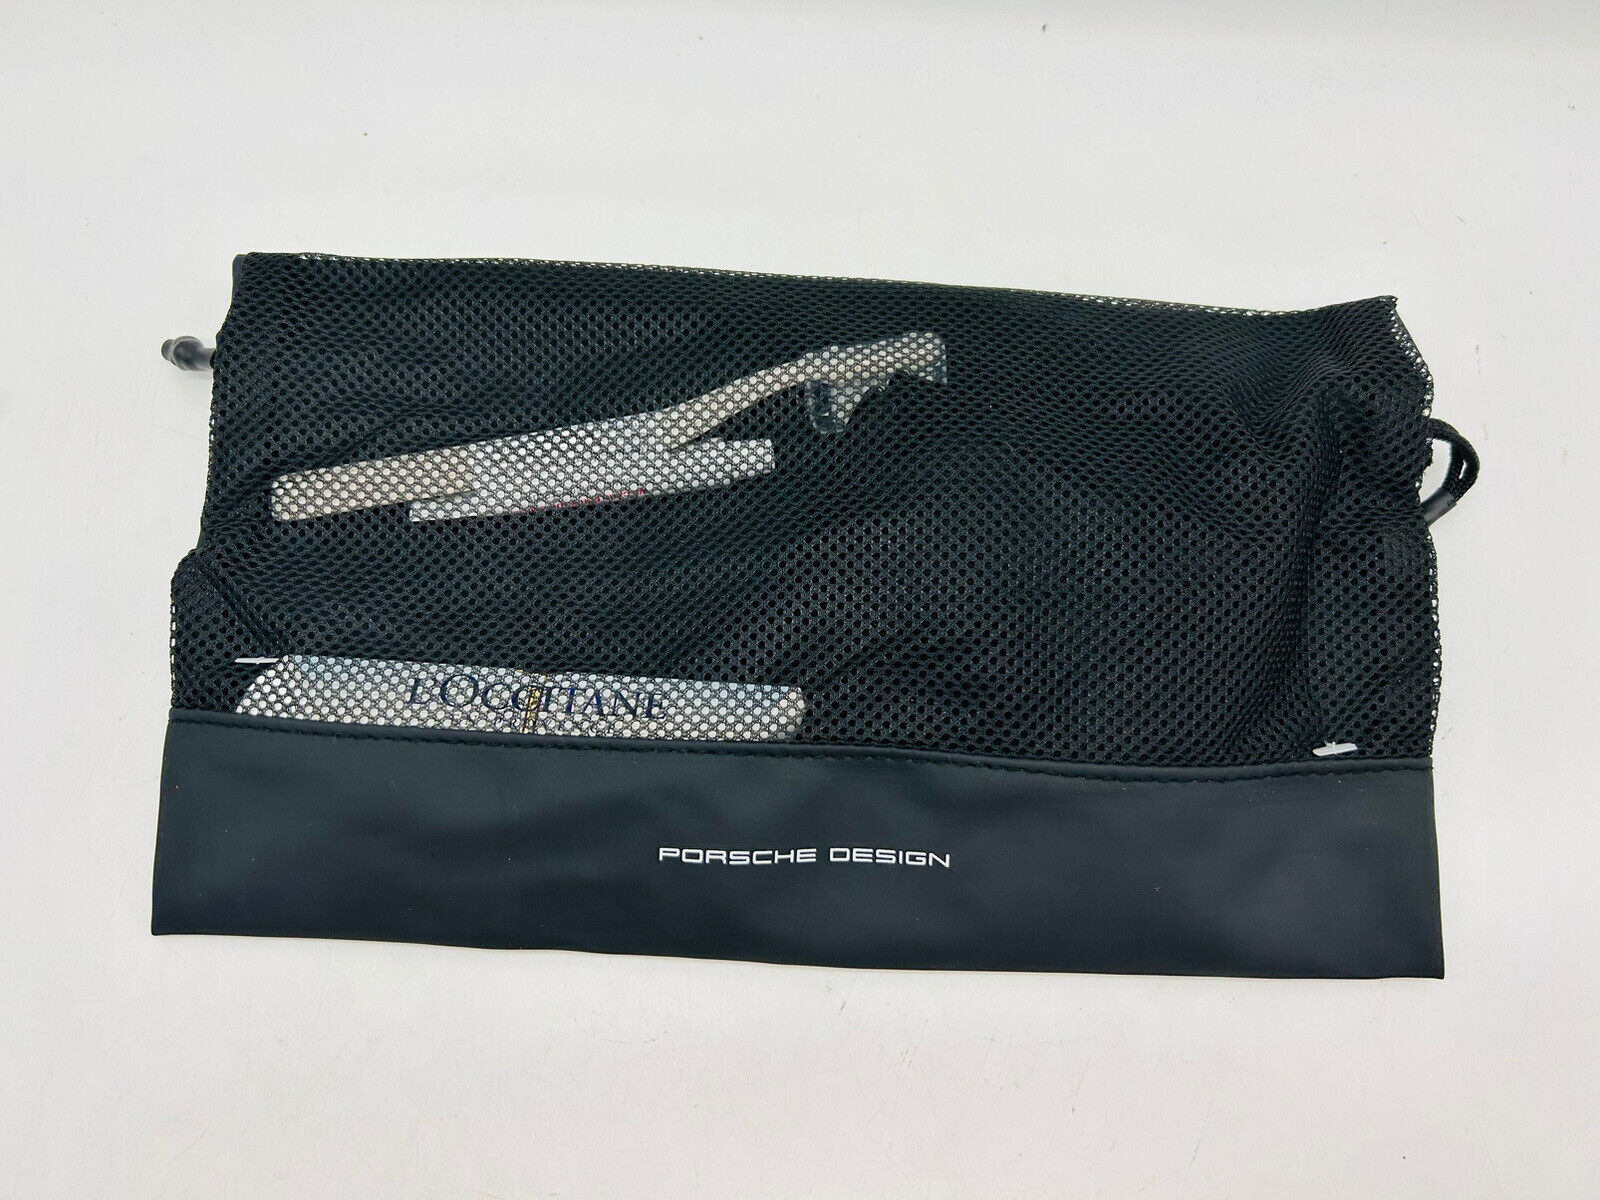 Lufthansa PORSCHE DESIGN Premium Economy Amenity Kit Bag Socks Mask Mesh